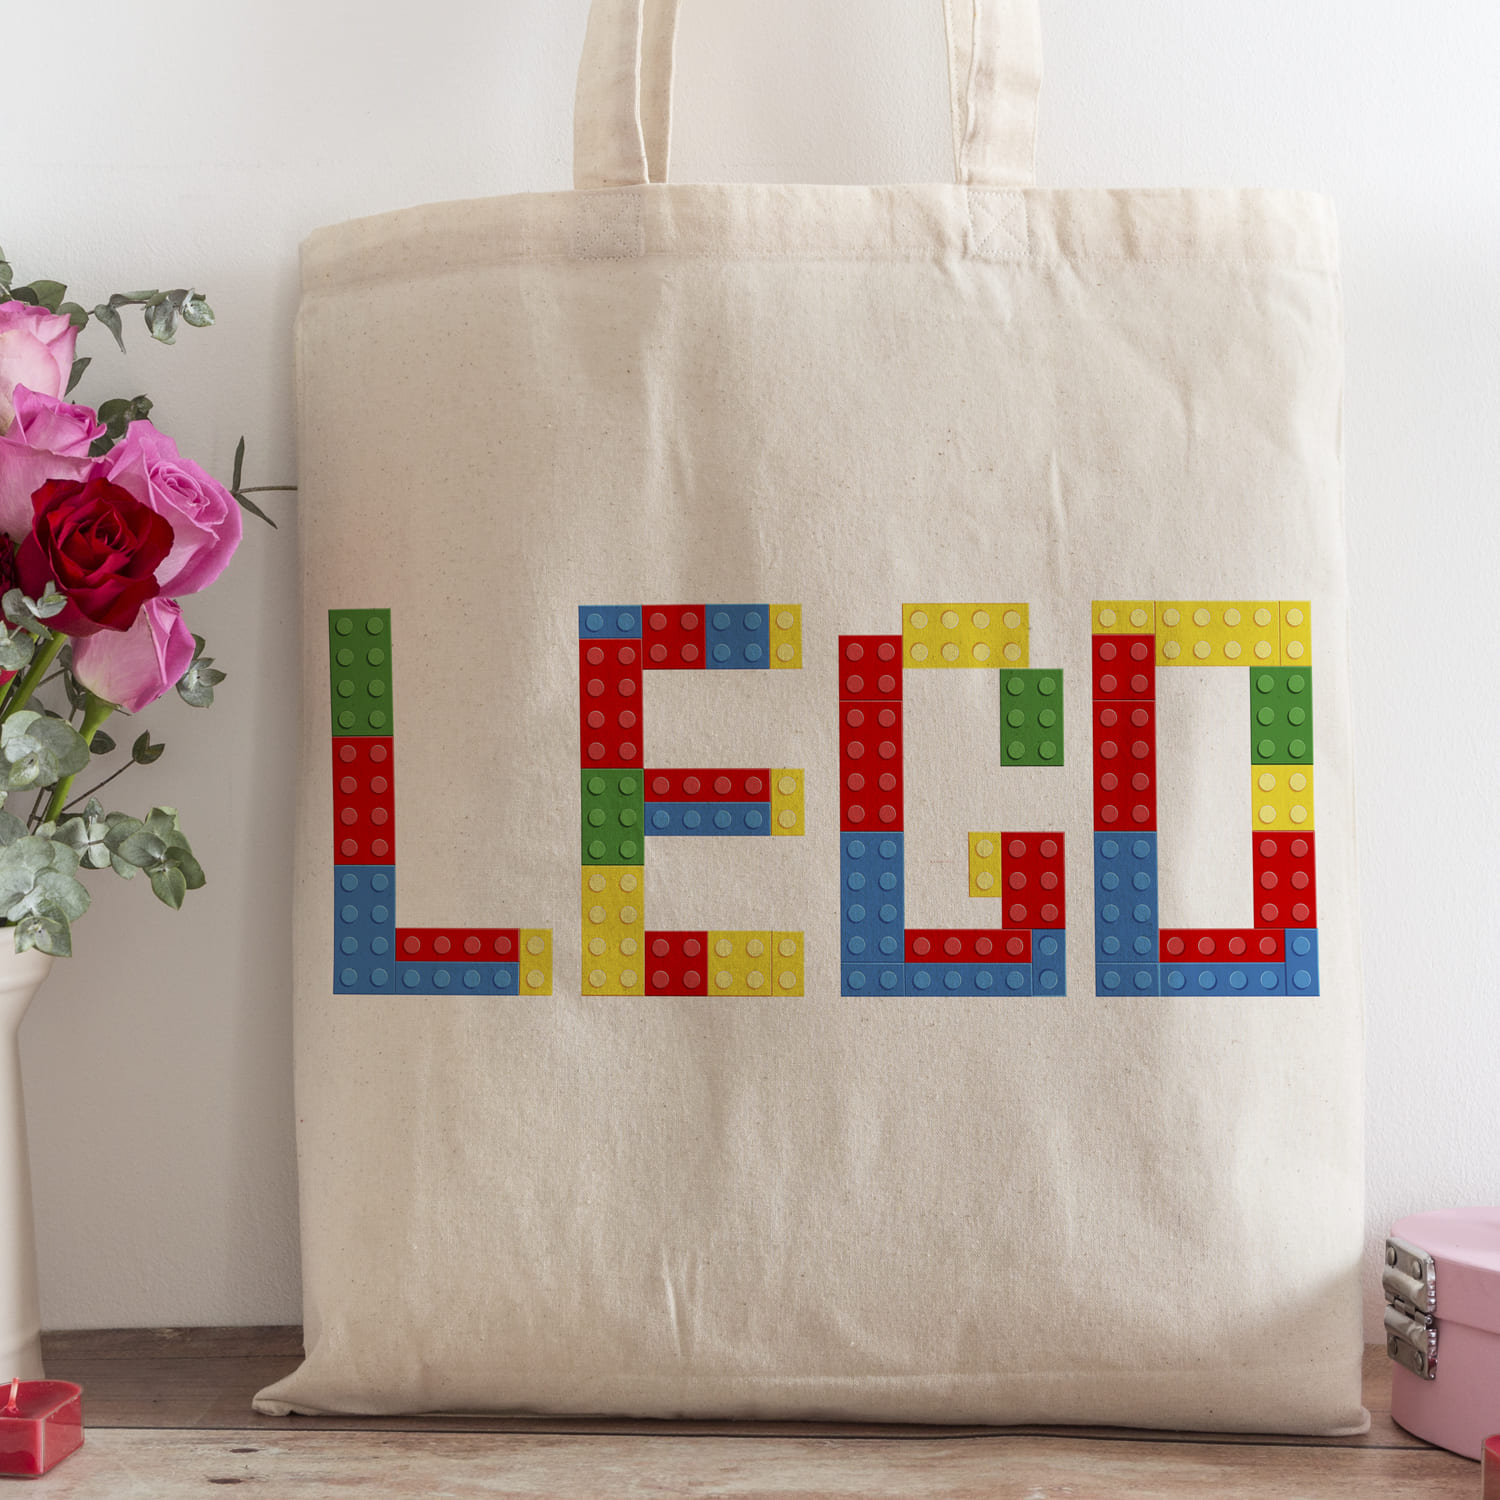 Lego brick svg design on the shopping bag.